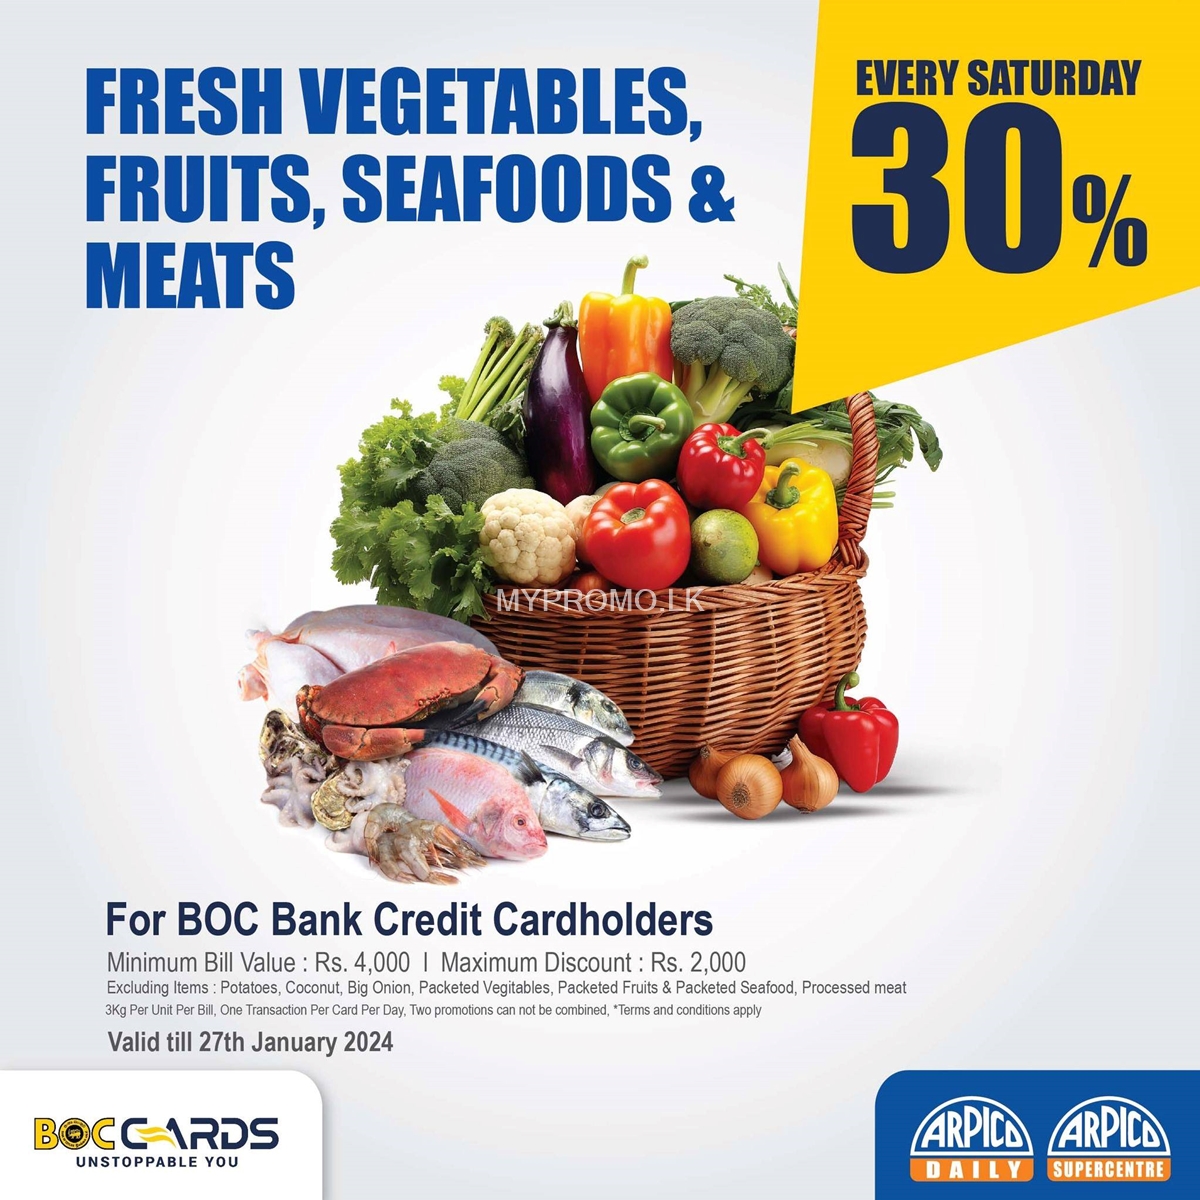 Enjoy 30% savings on fruits, vegetables, seafood & Meats at Arpico Super Centre with BOC Bank Credit Cards